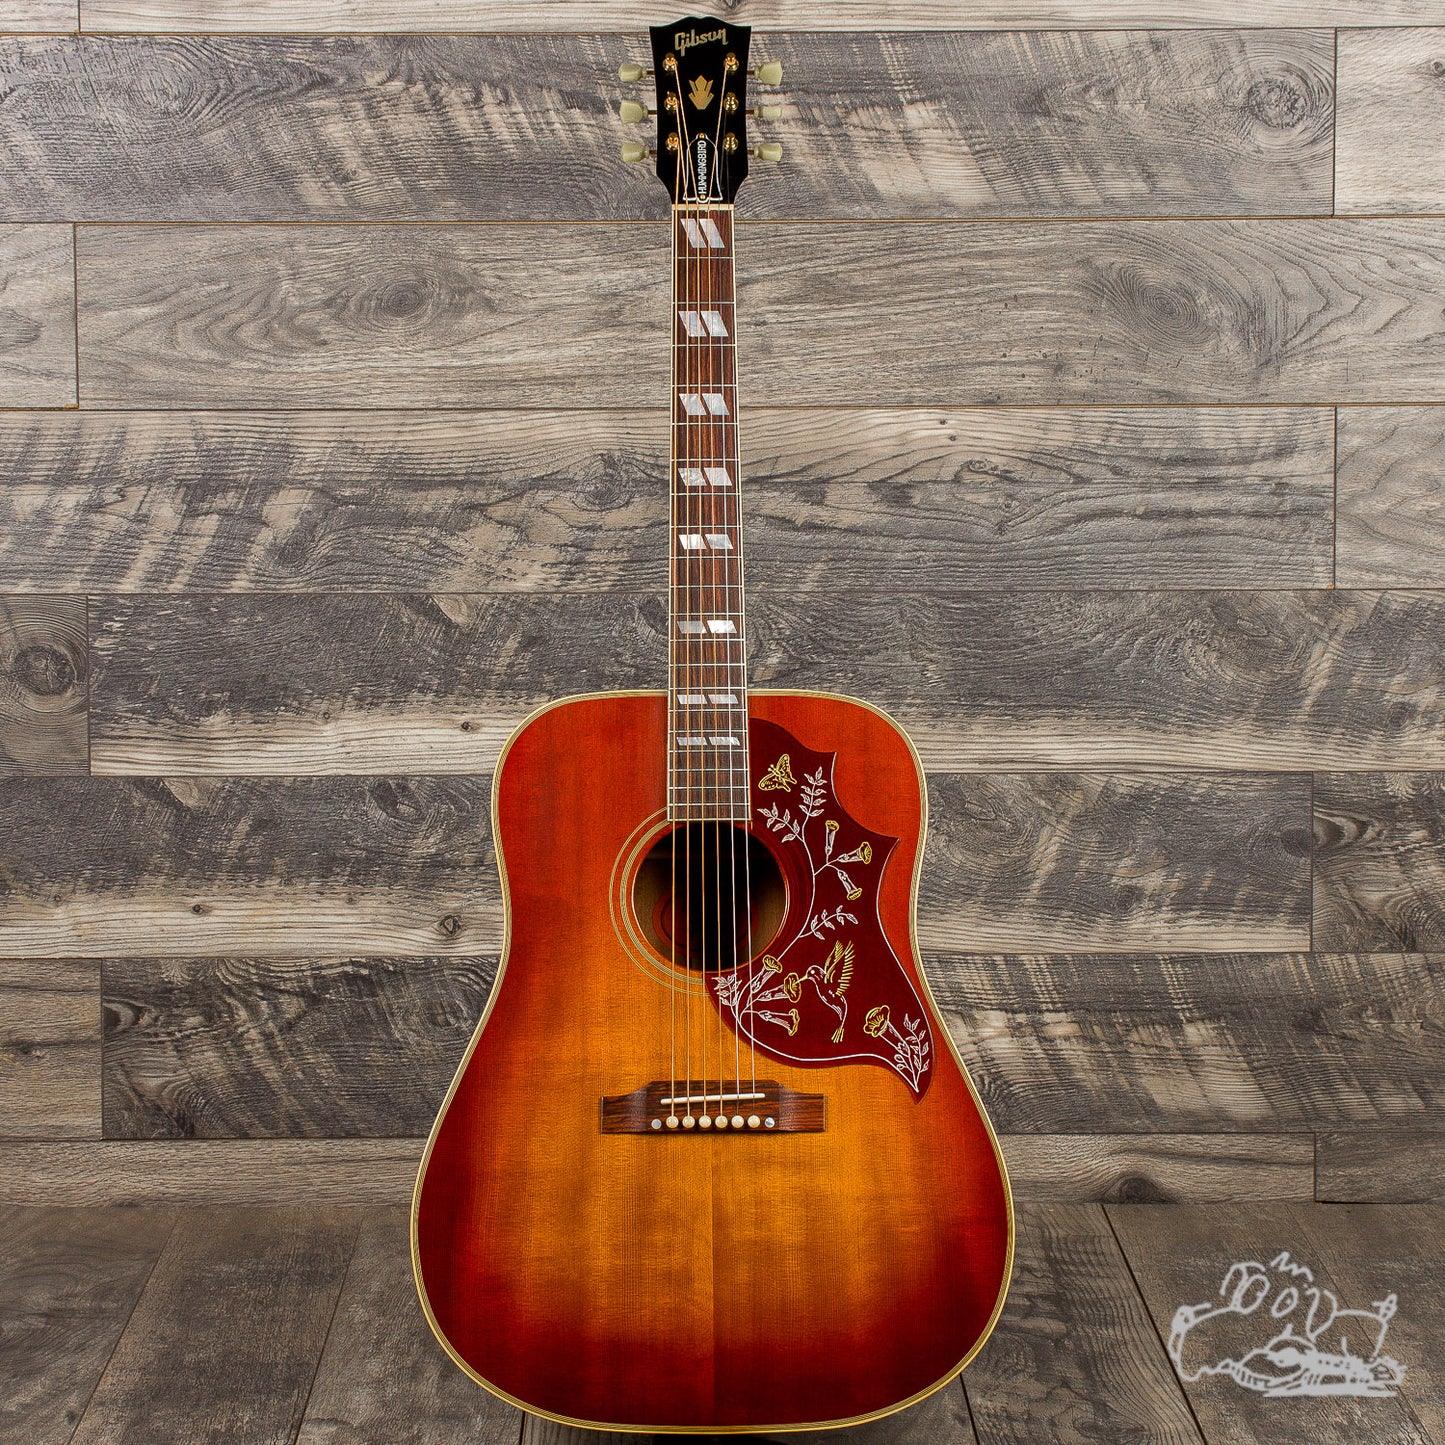 2020 Gibson Hummingbird '60 Reissue with Torrified Top